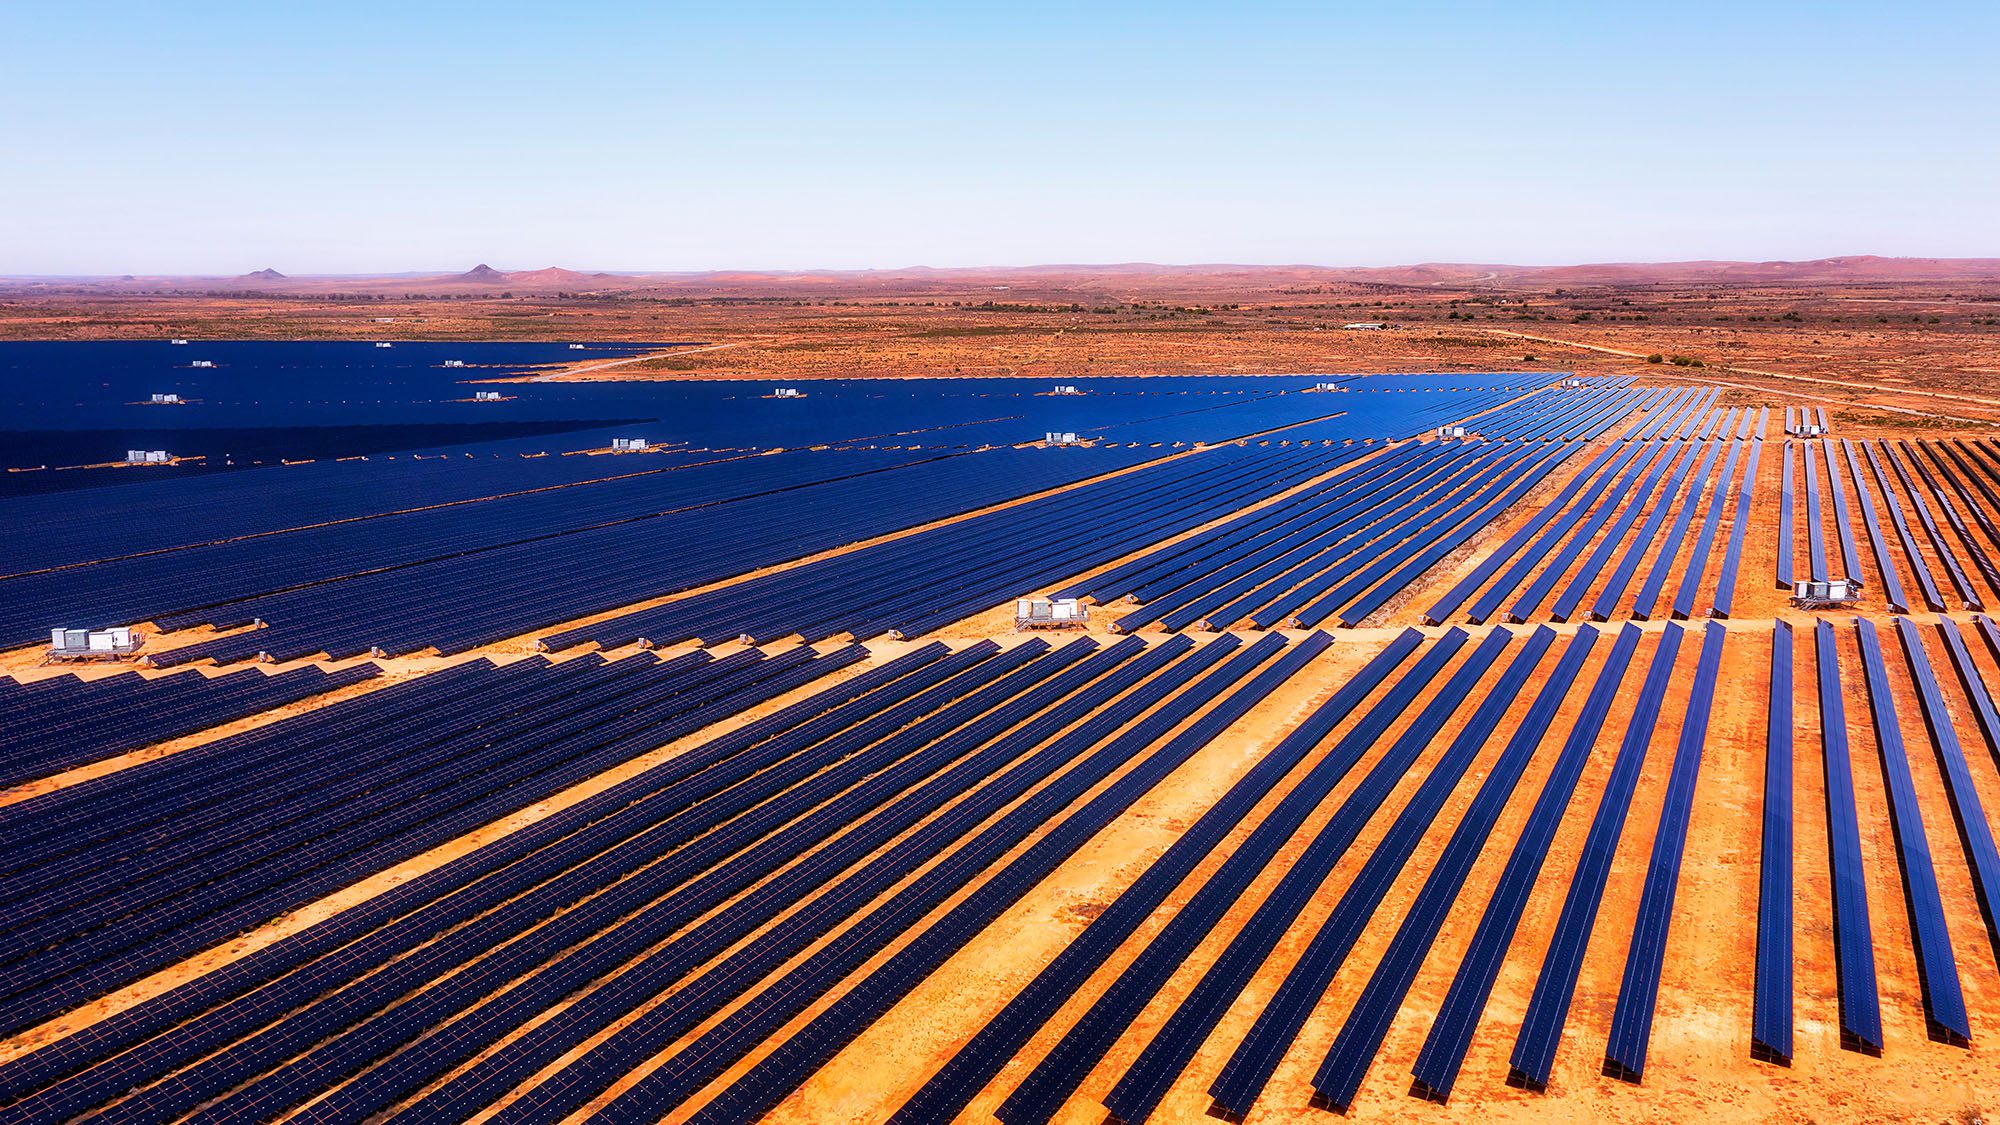 Solar panels in Northwest Australia